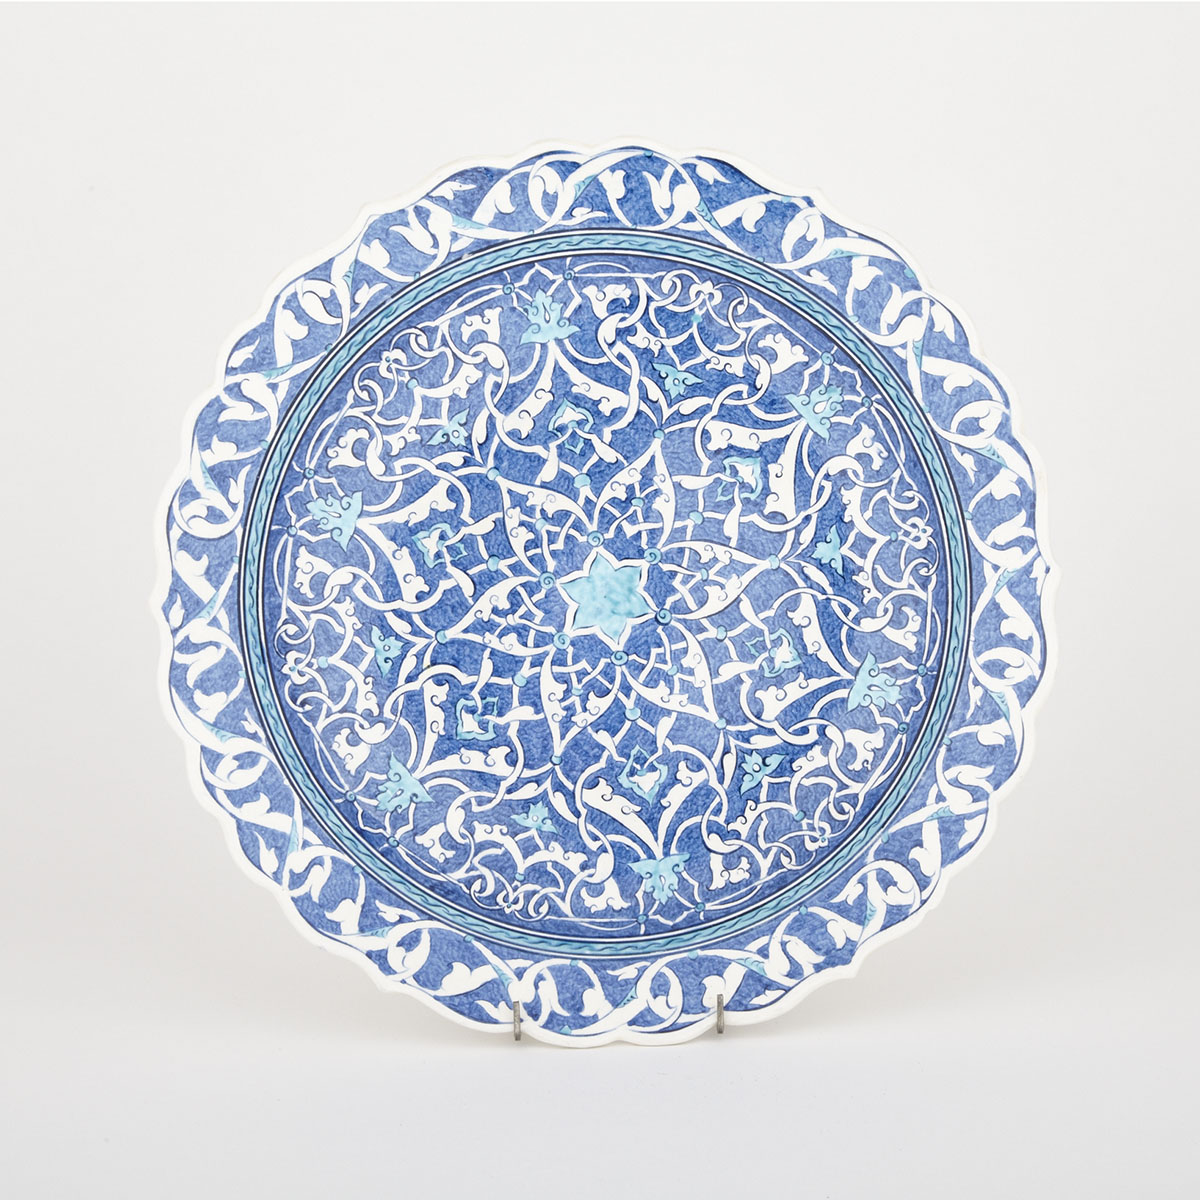 An Islamic Çini Tabaklar, Pottery Charger, Signed Byixli-Seyfettin, Kupahxa, Turkiye